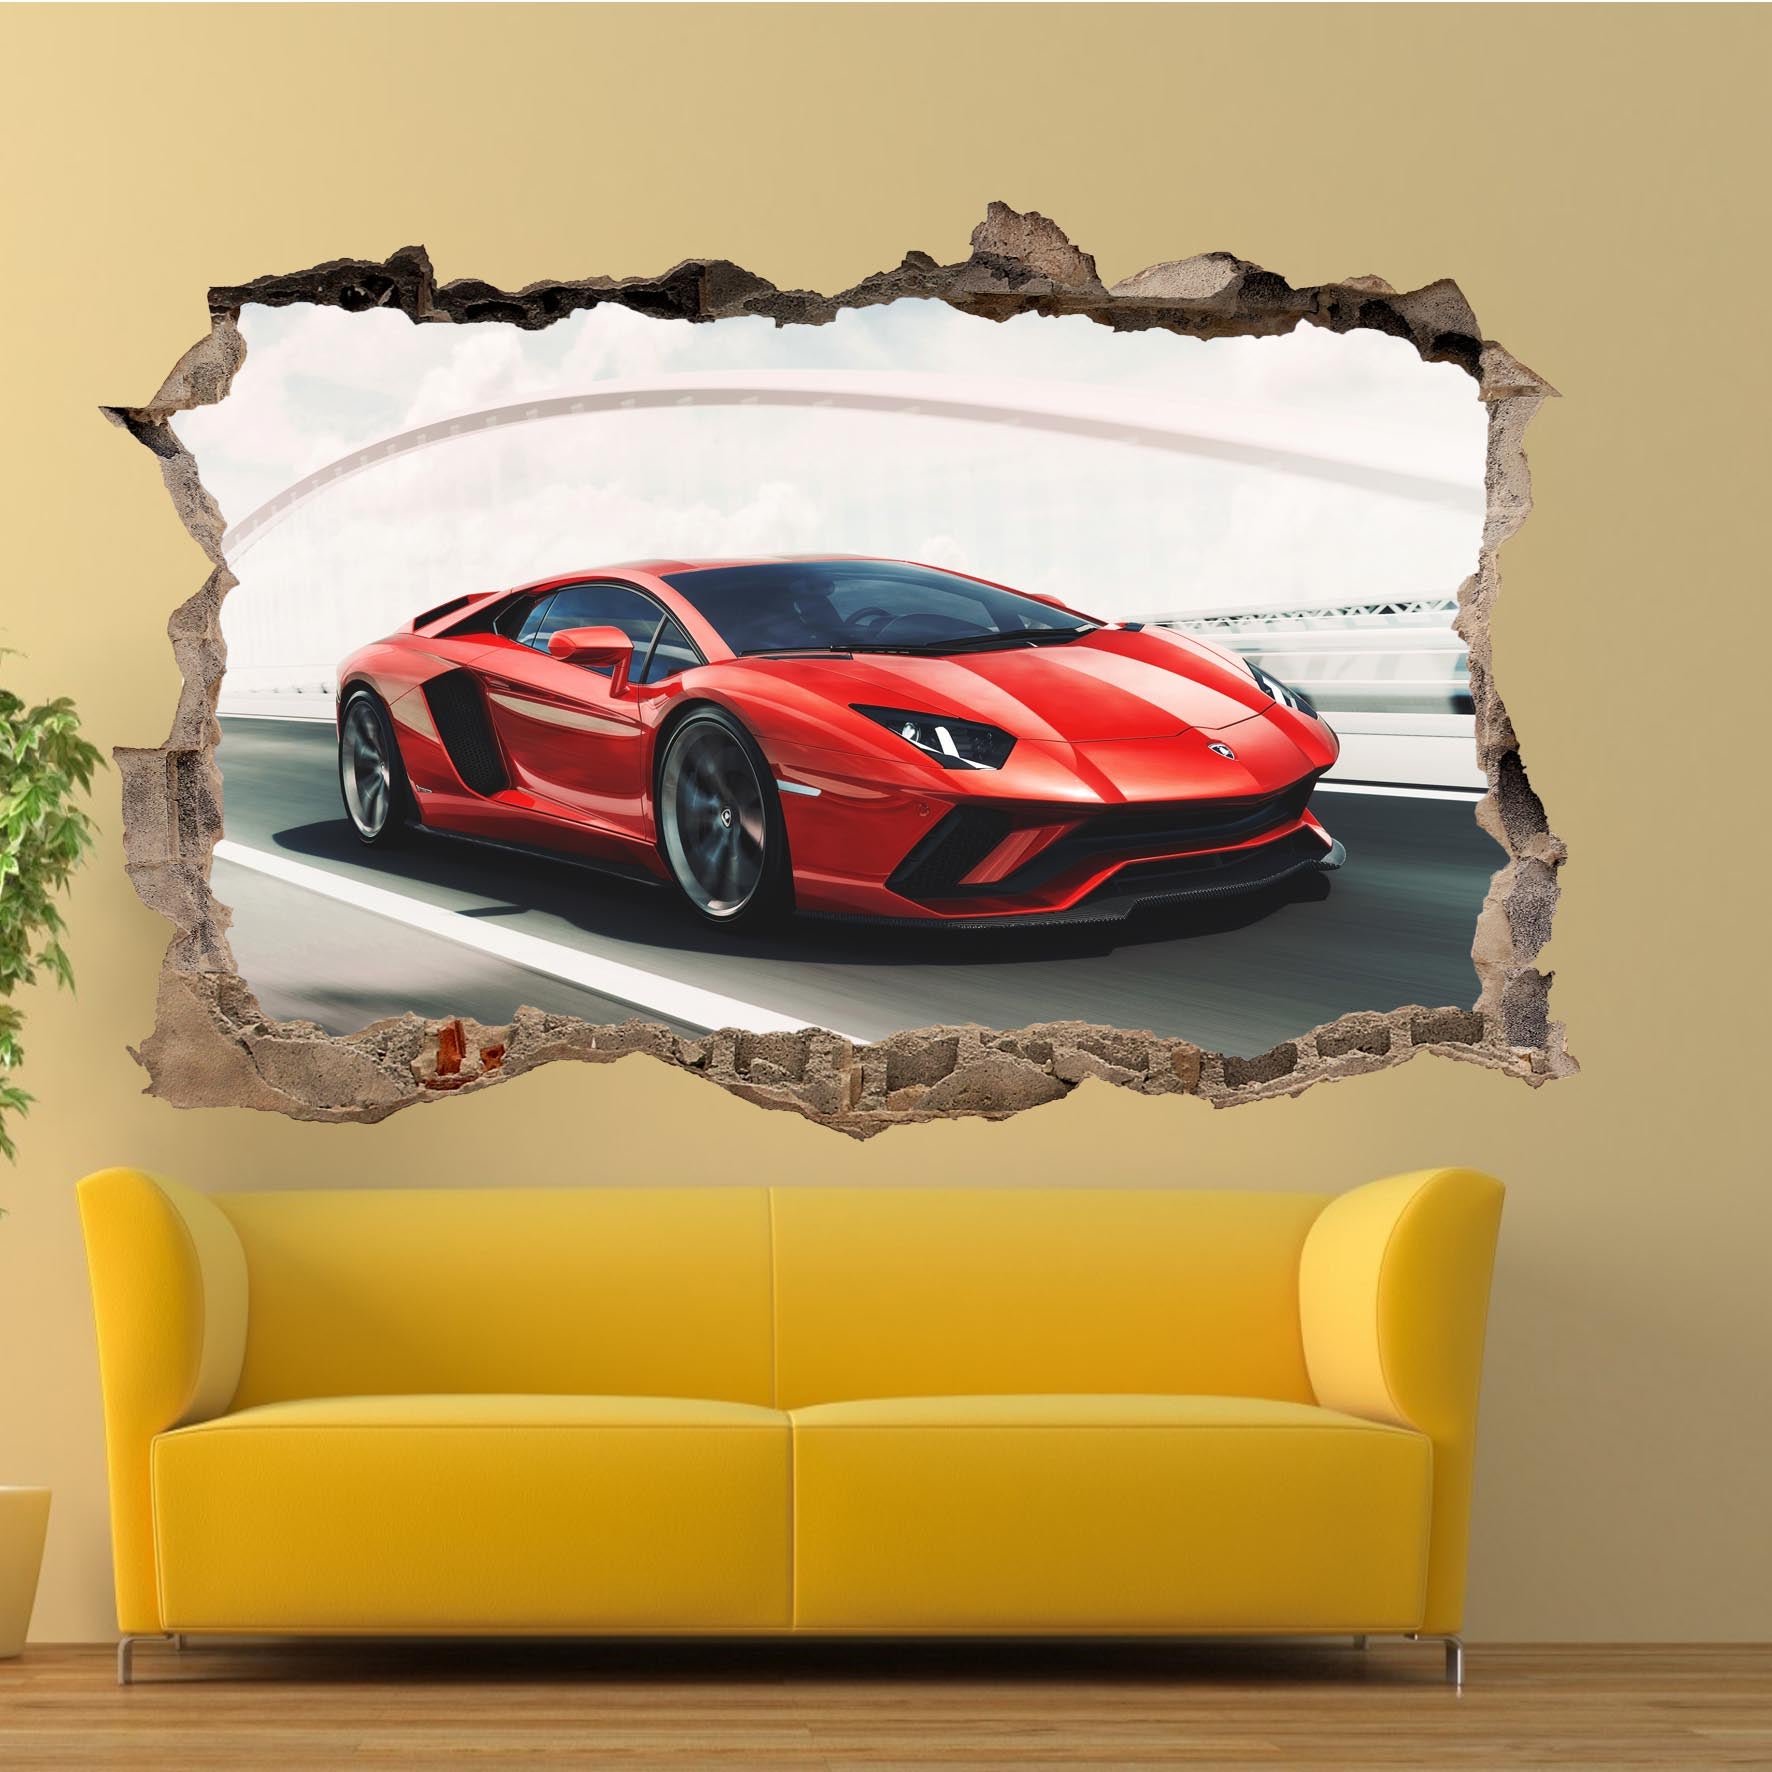 Lamborghini avendator super sports car poster wall sticker mural decal